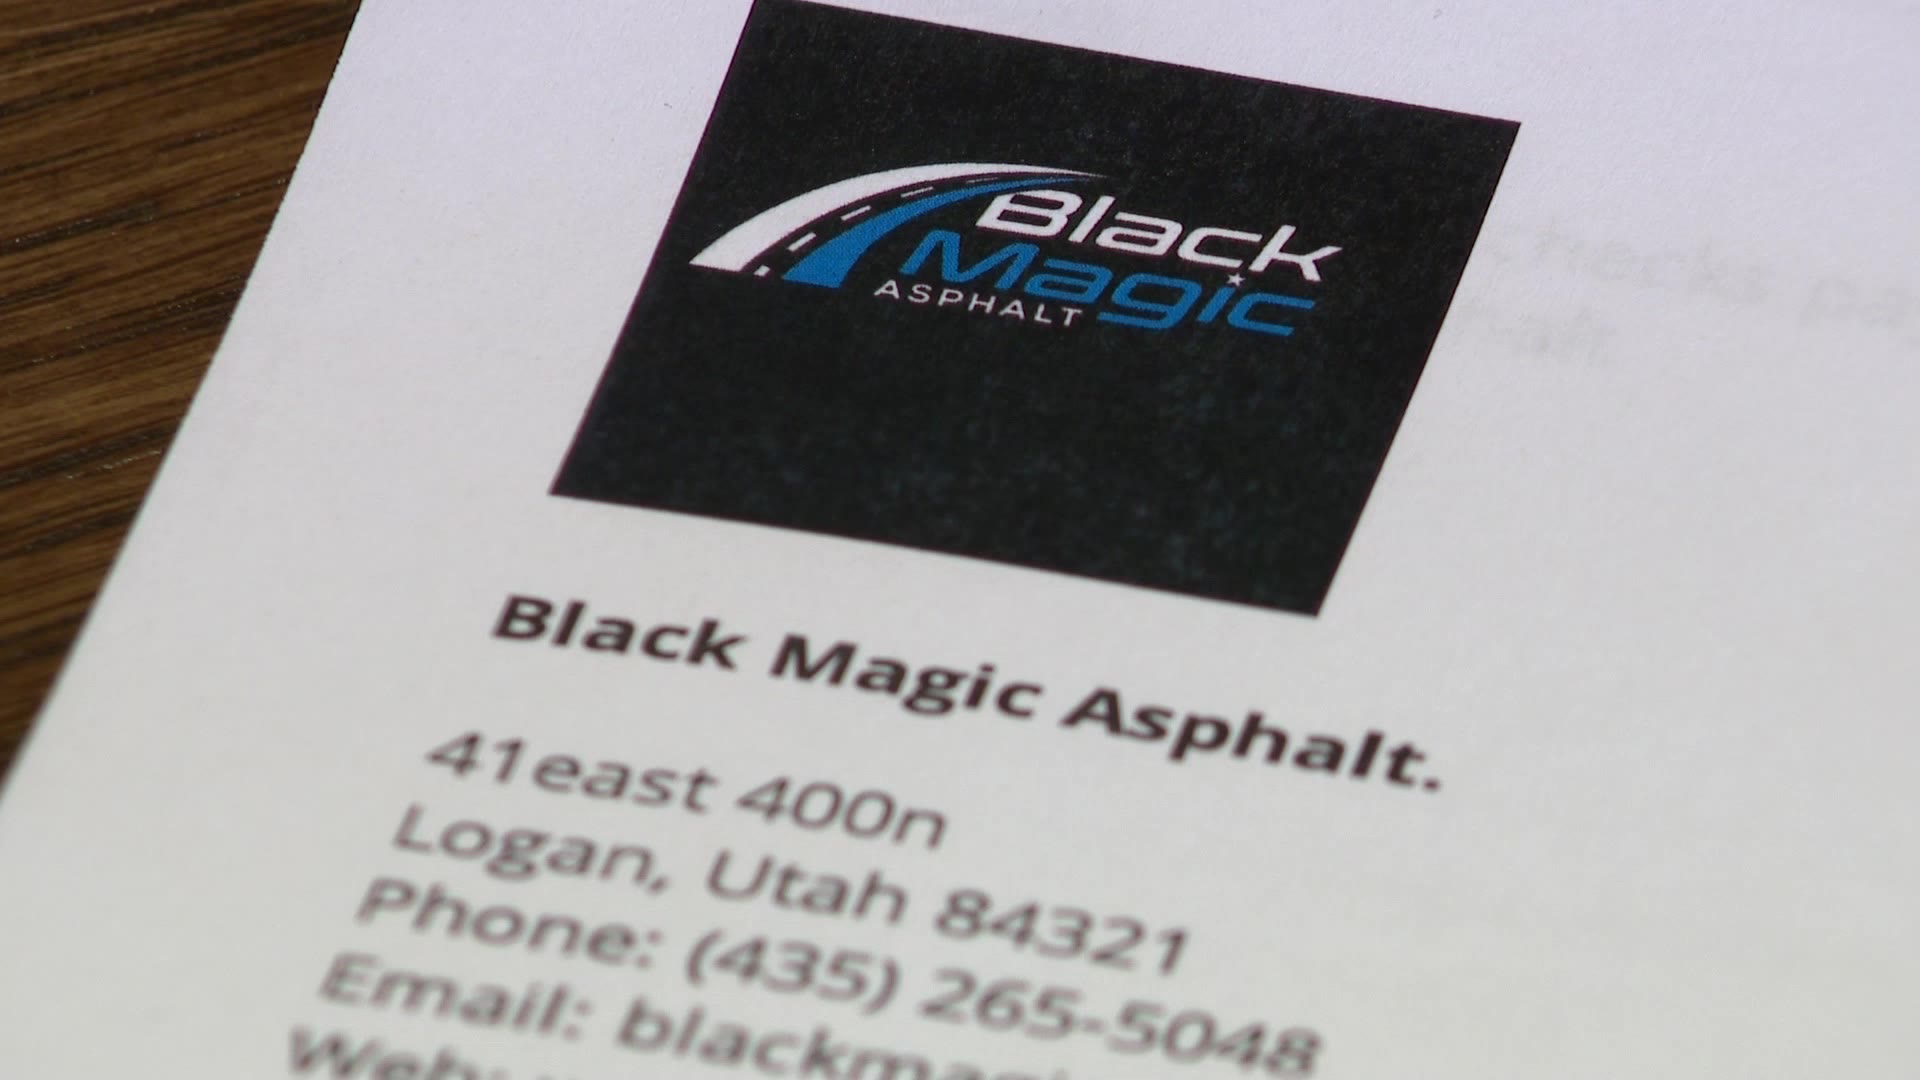 The Black Magic Asphalt logo on documents that were exchanged with El Cholo’s Manuel Jacquez....